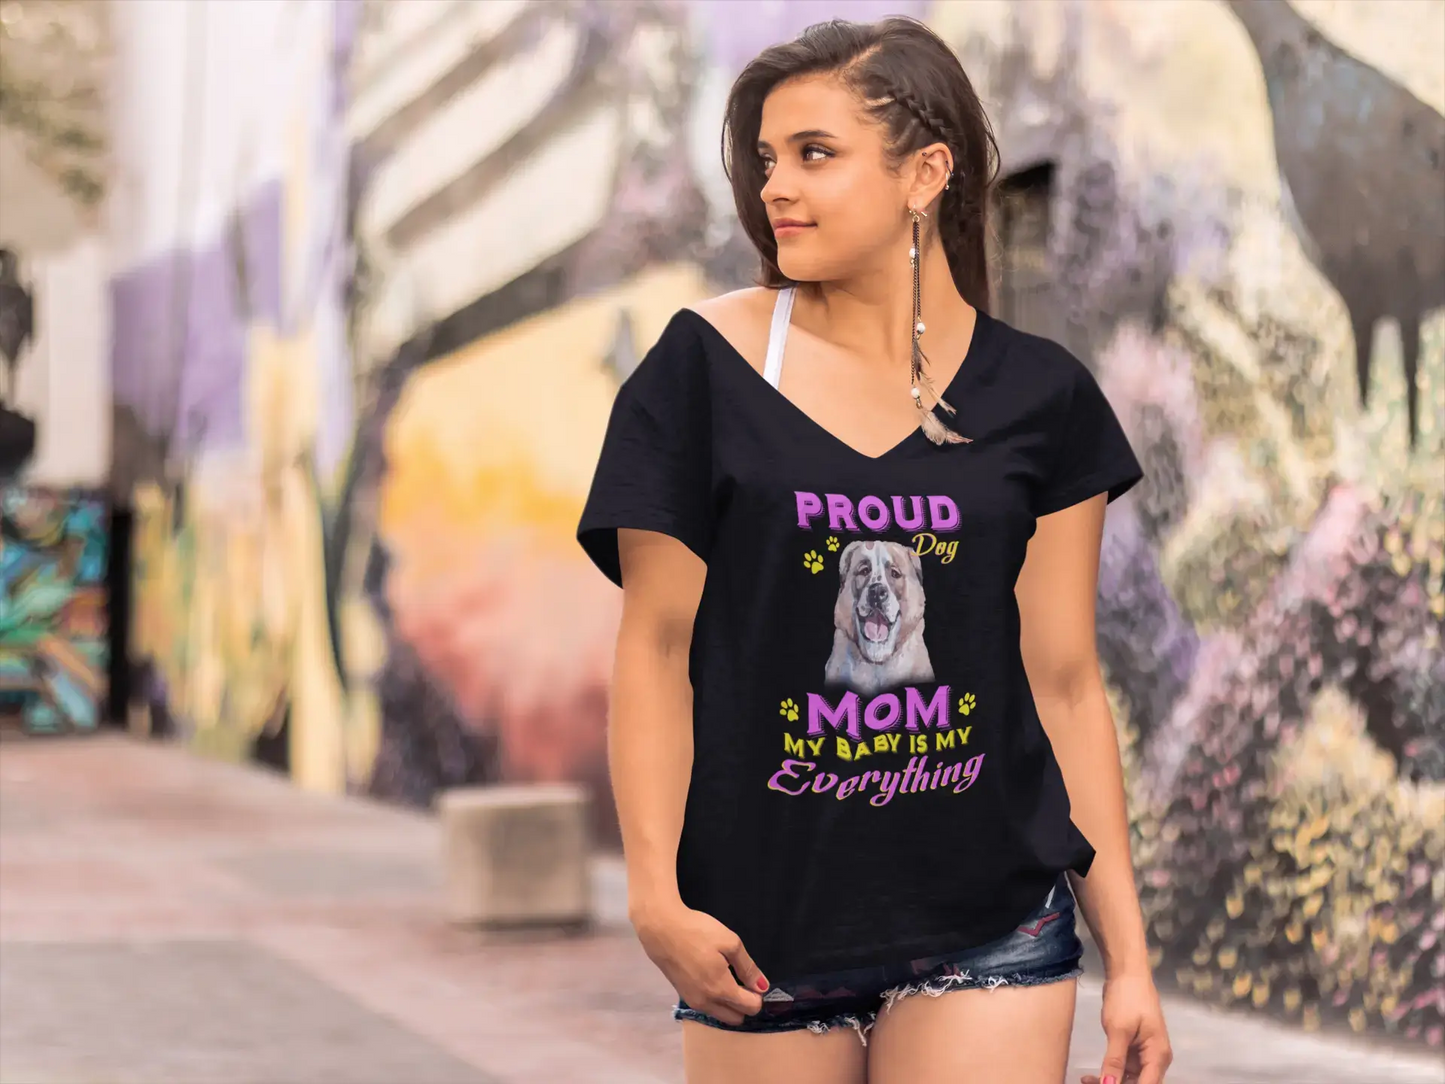 ULTRABASIC Women's T-Shirt Proud Day - Alabai Dog Mom - My Baby is My Everything